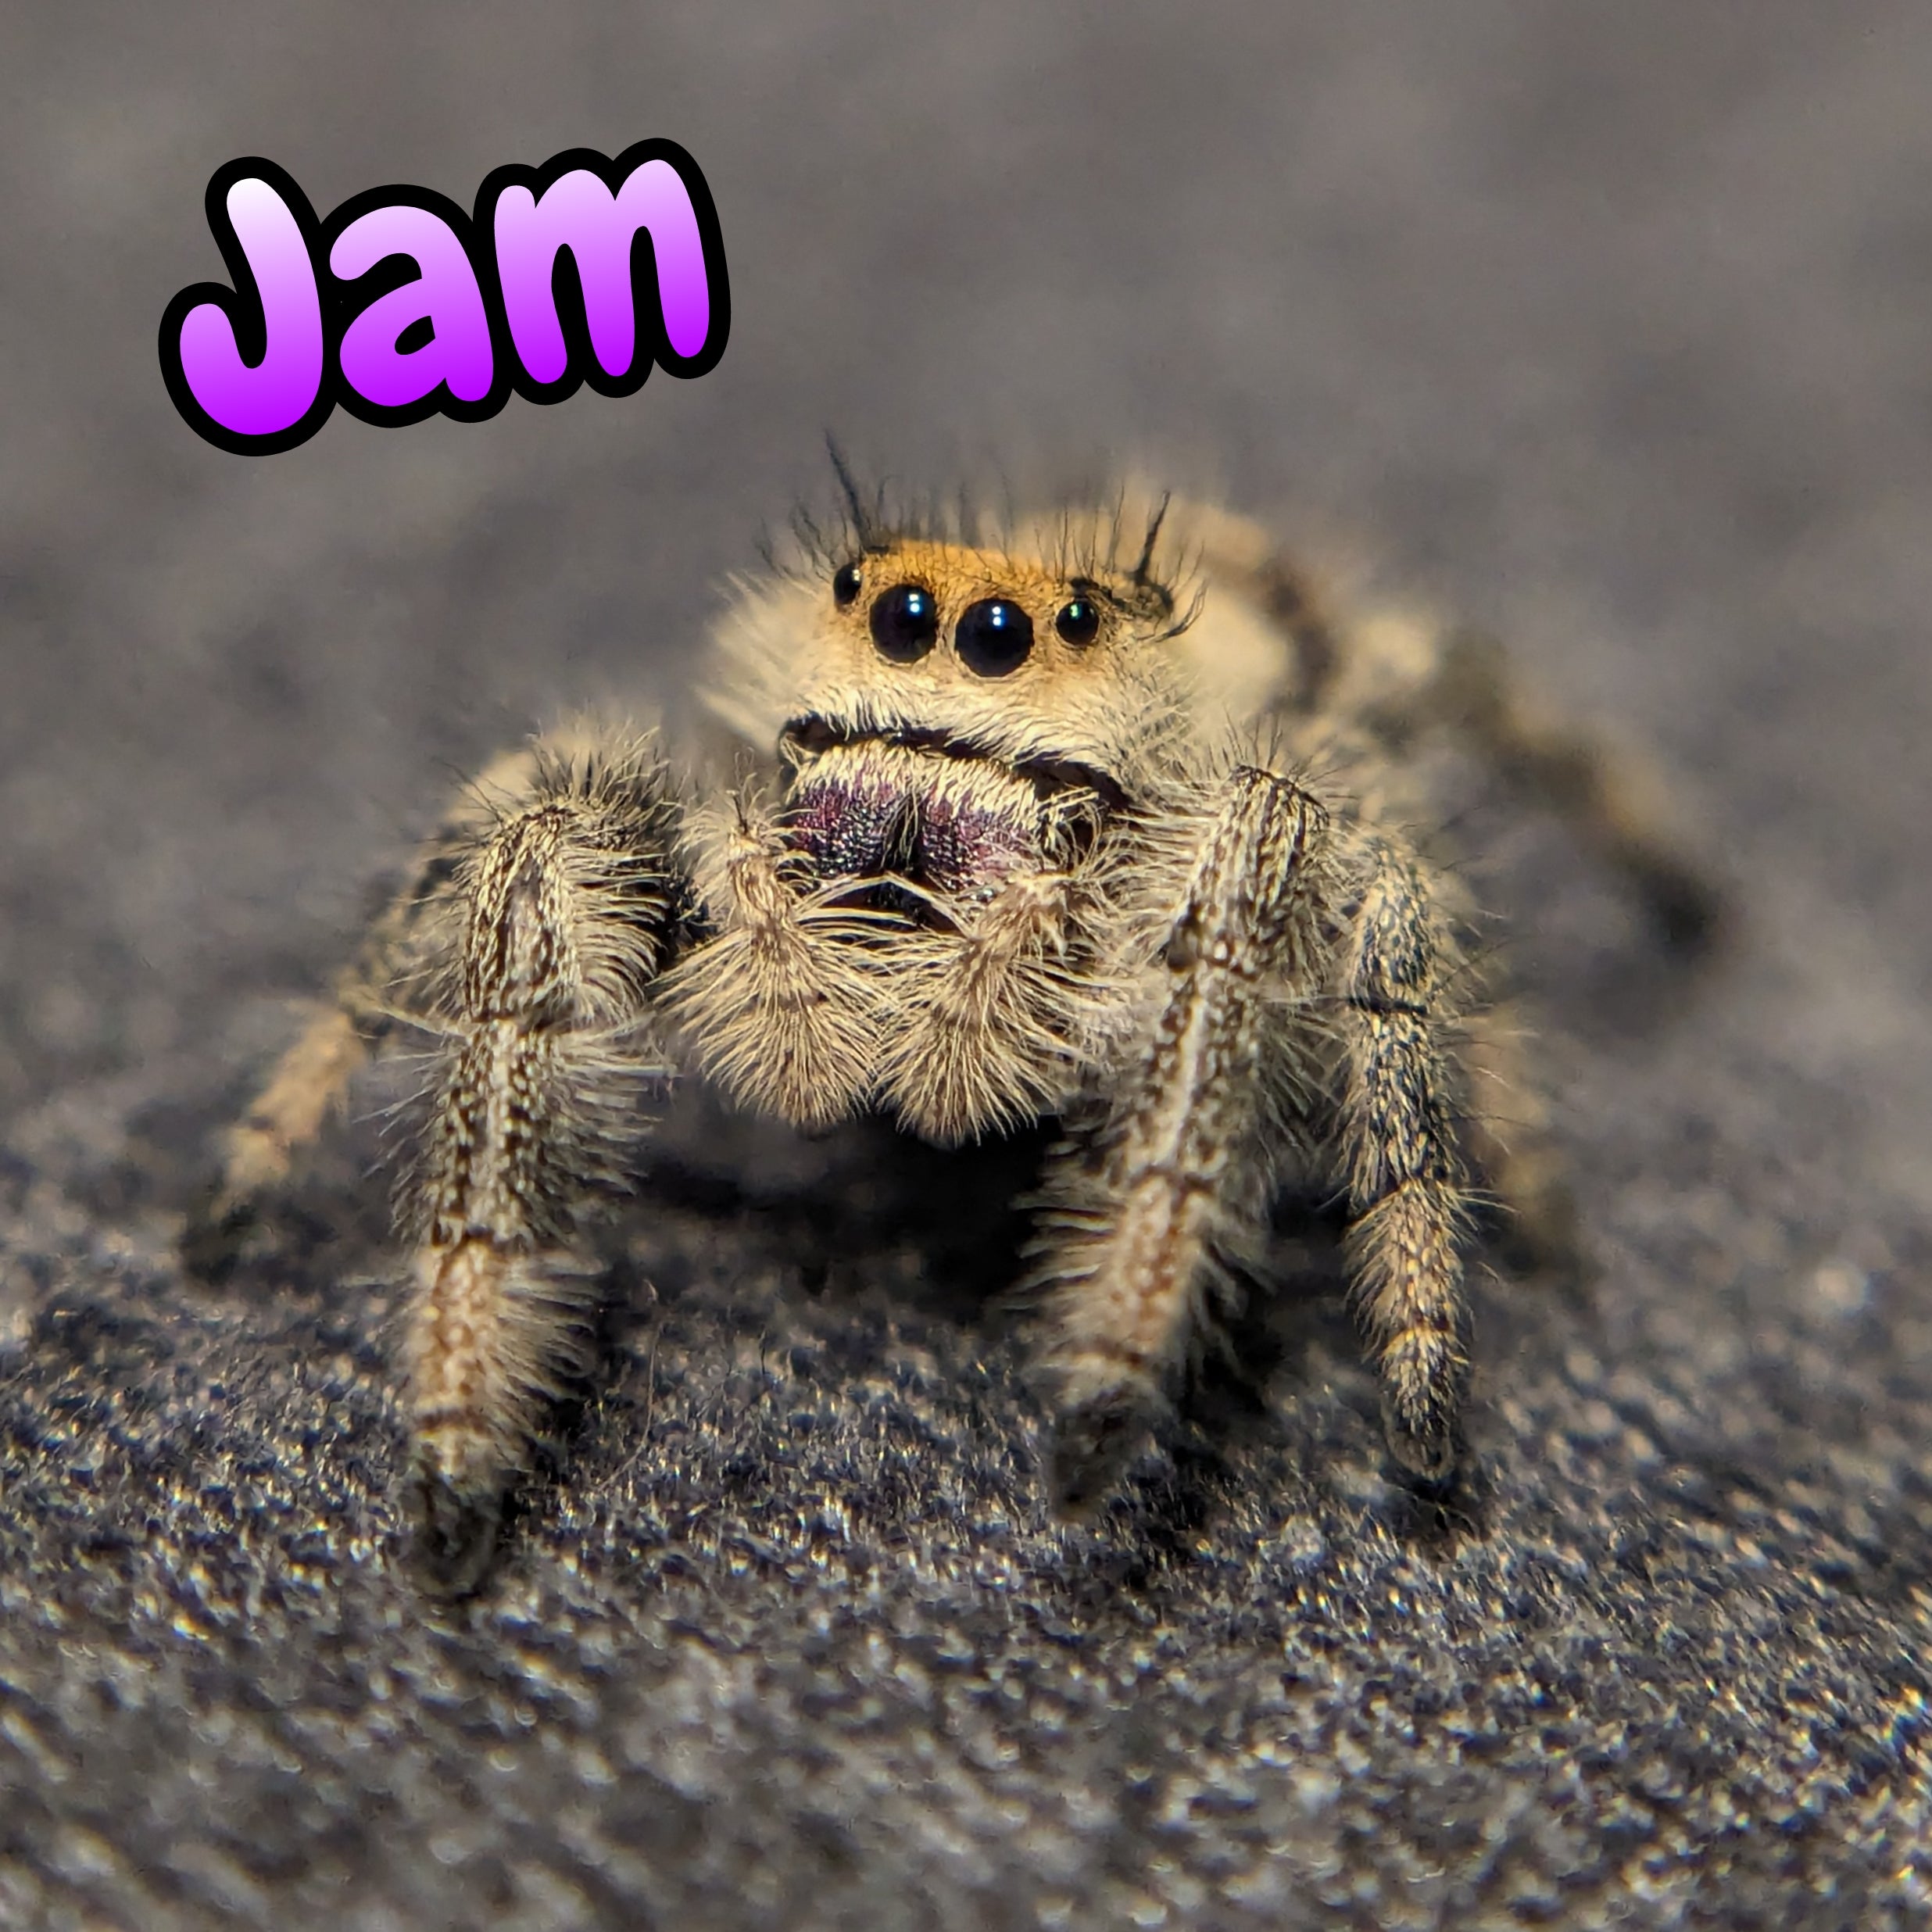 Regal Jumping Spider "Jam"